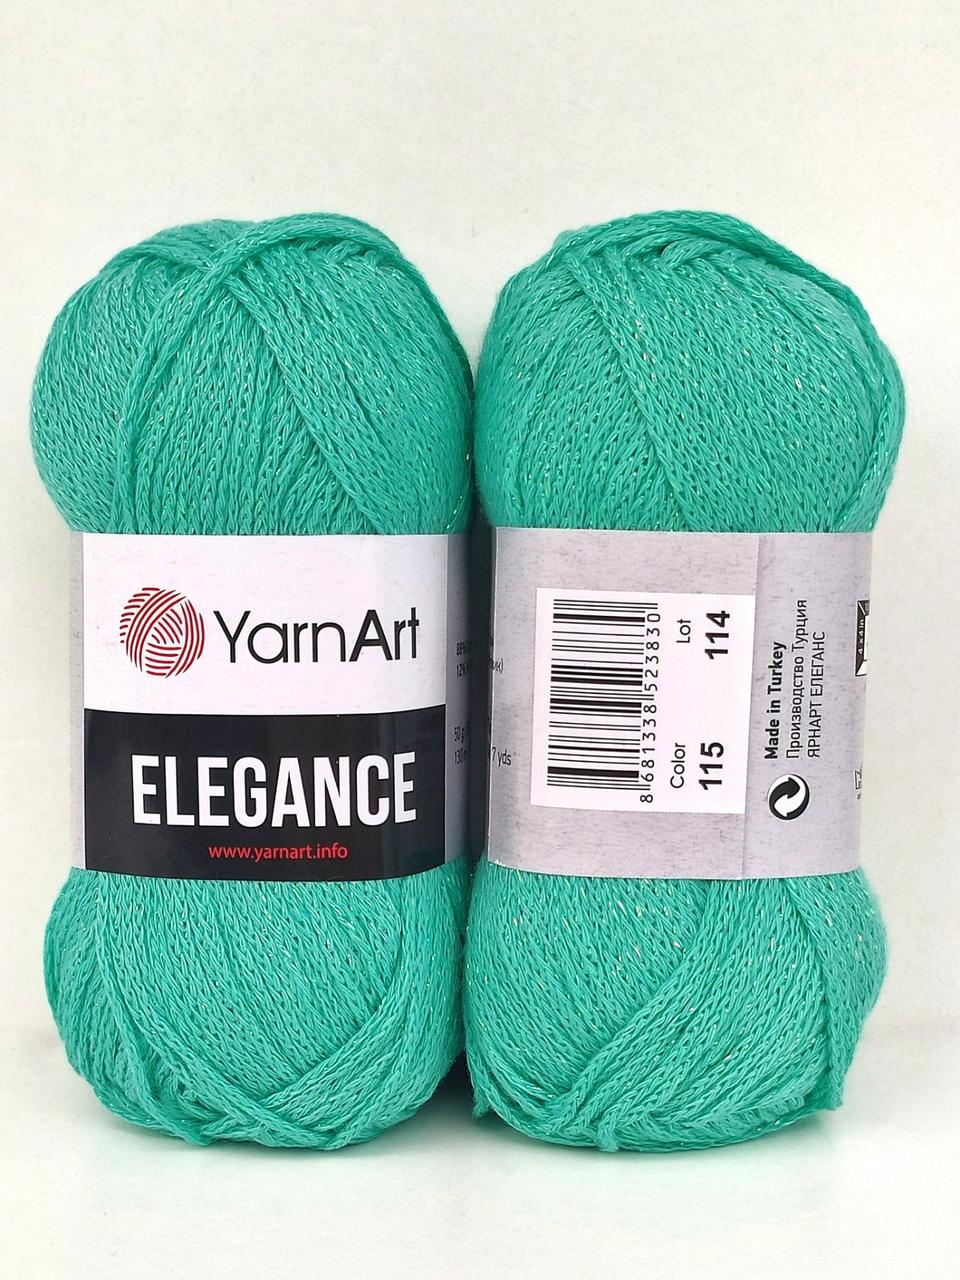 YarnArt Elegance 115 ментол